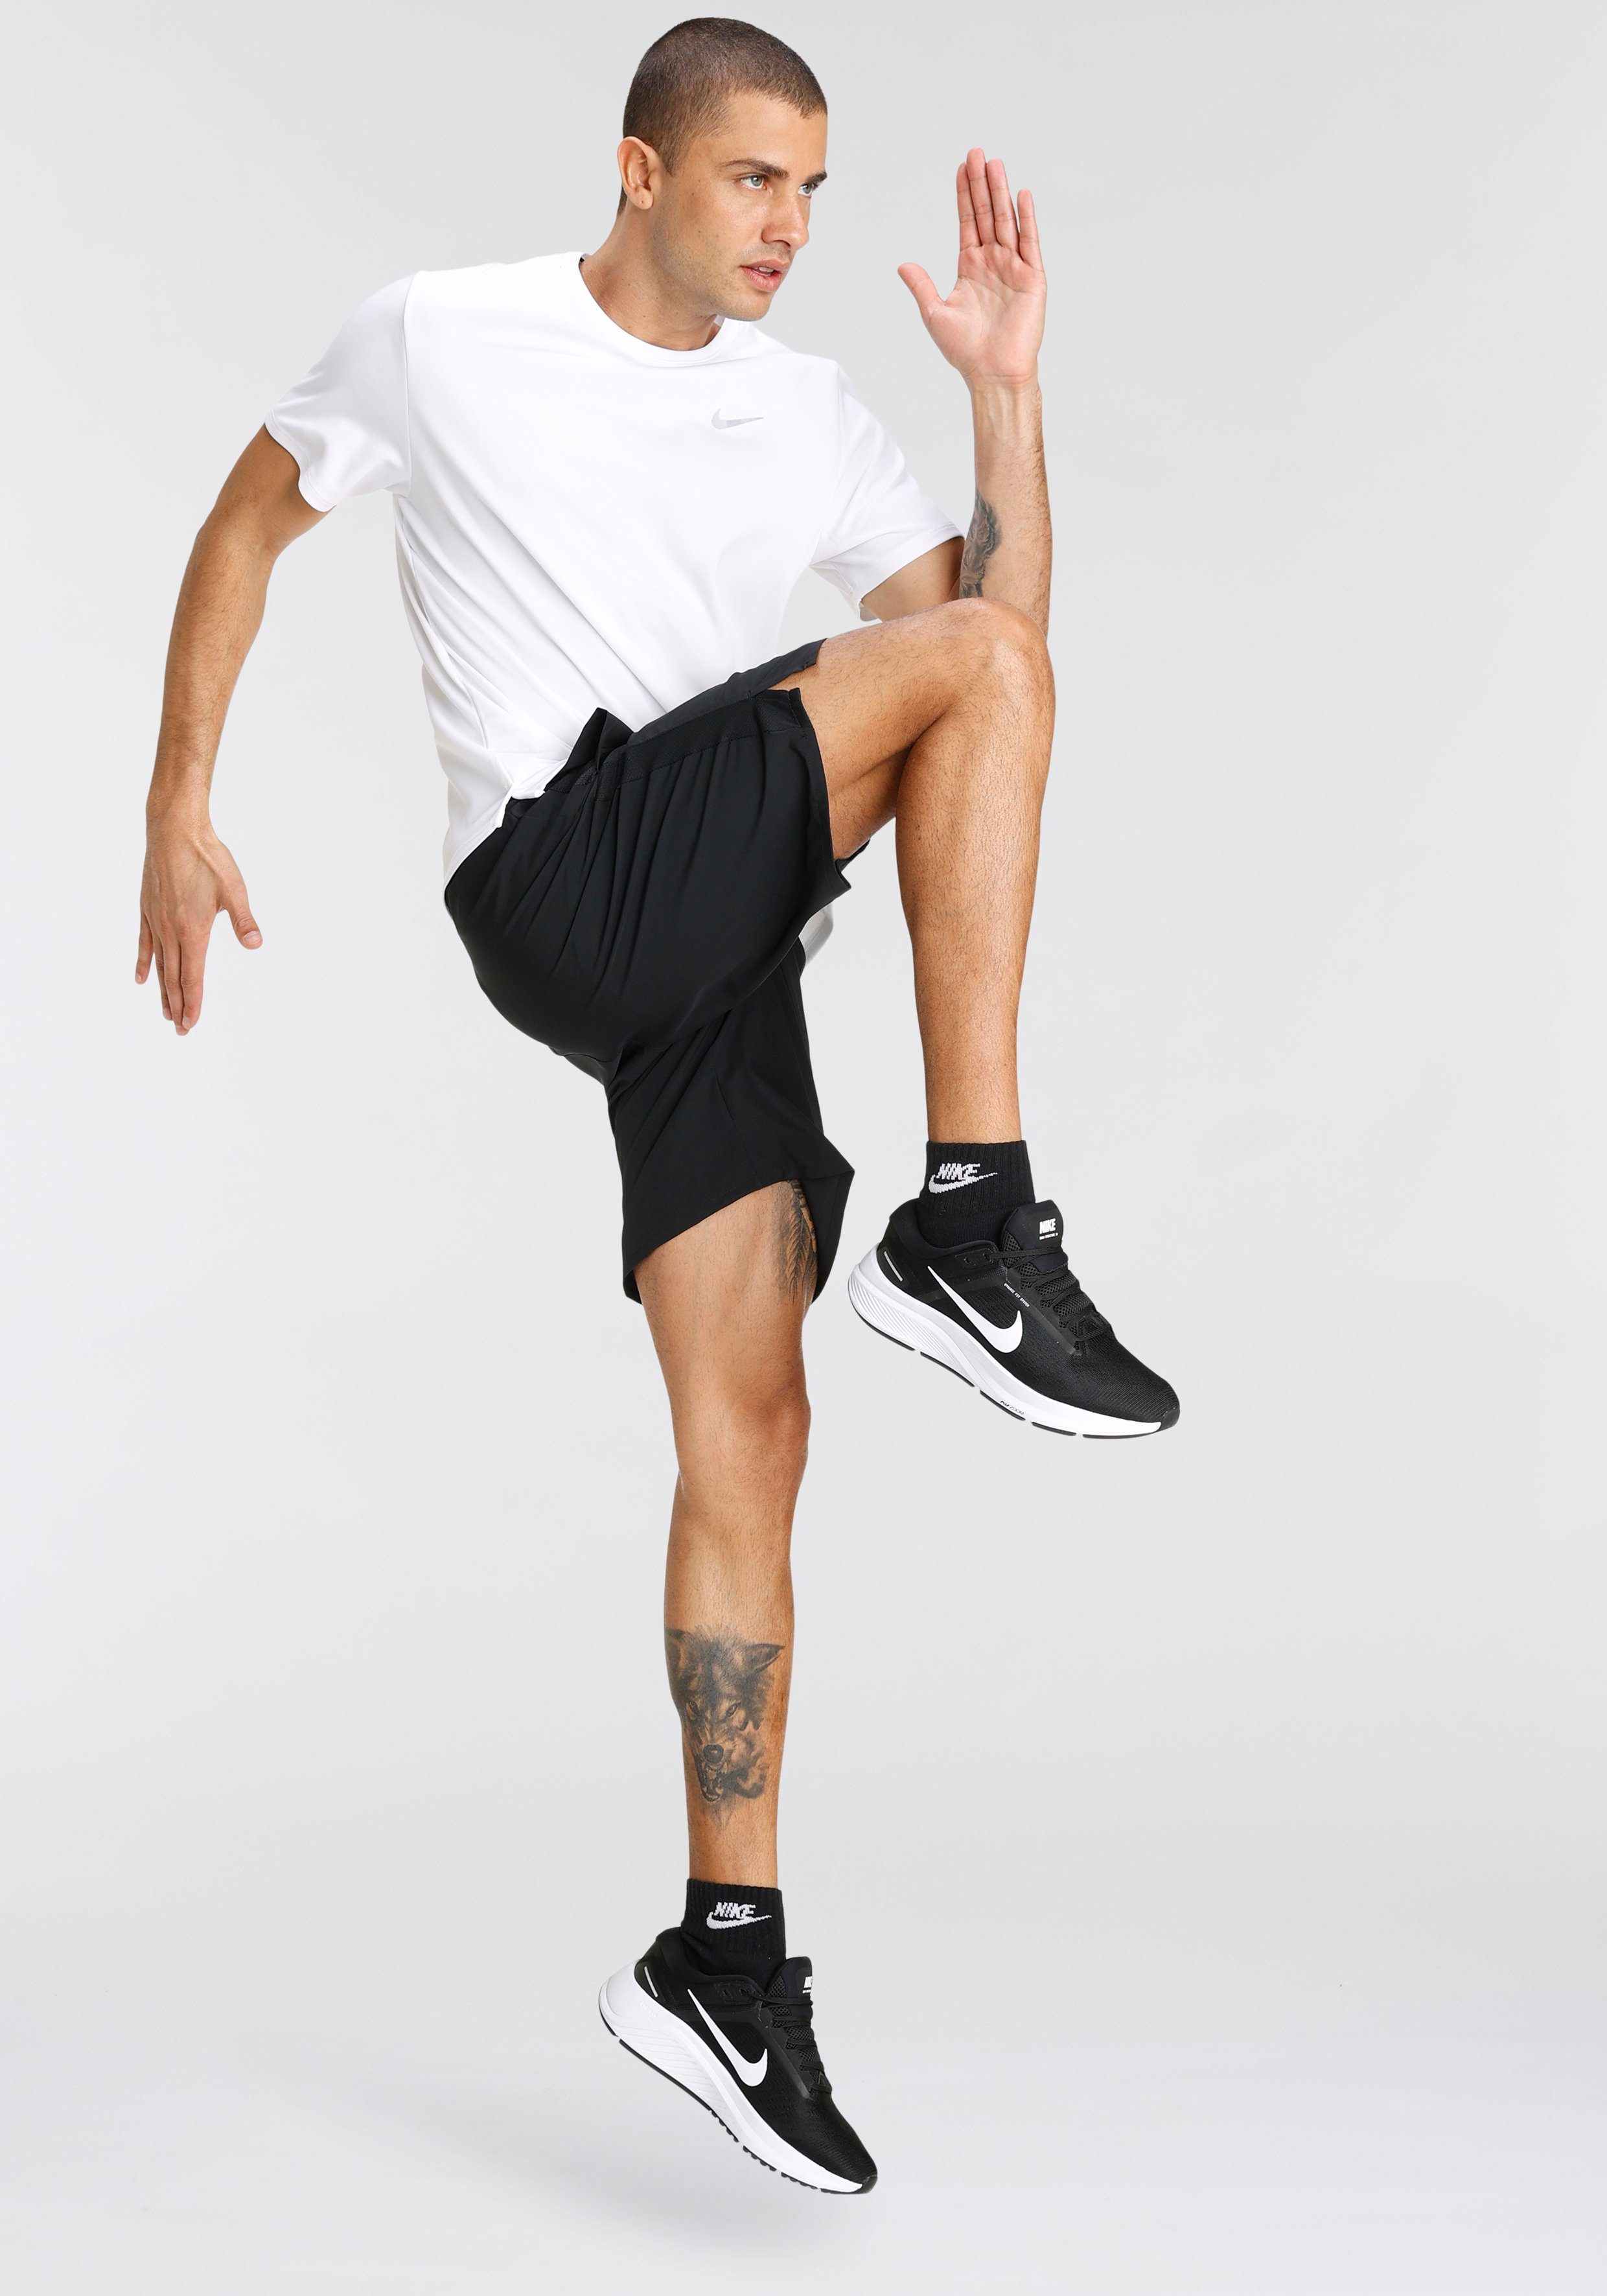 UV Nike RUNNING Laufshirt MEN'S TOP WHITE/REFLECTIVE SHORT-SLEEVE SILV MILER DRI-FIT